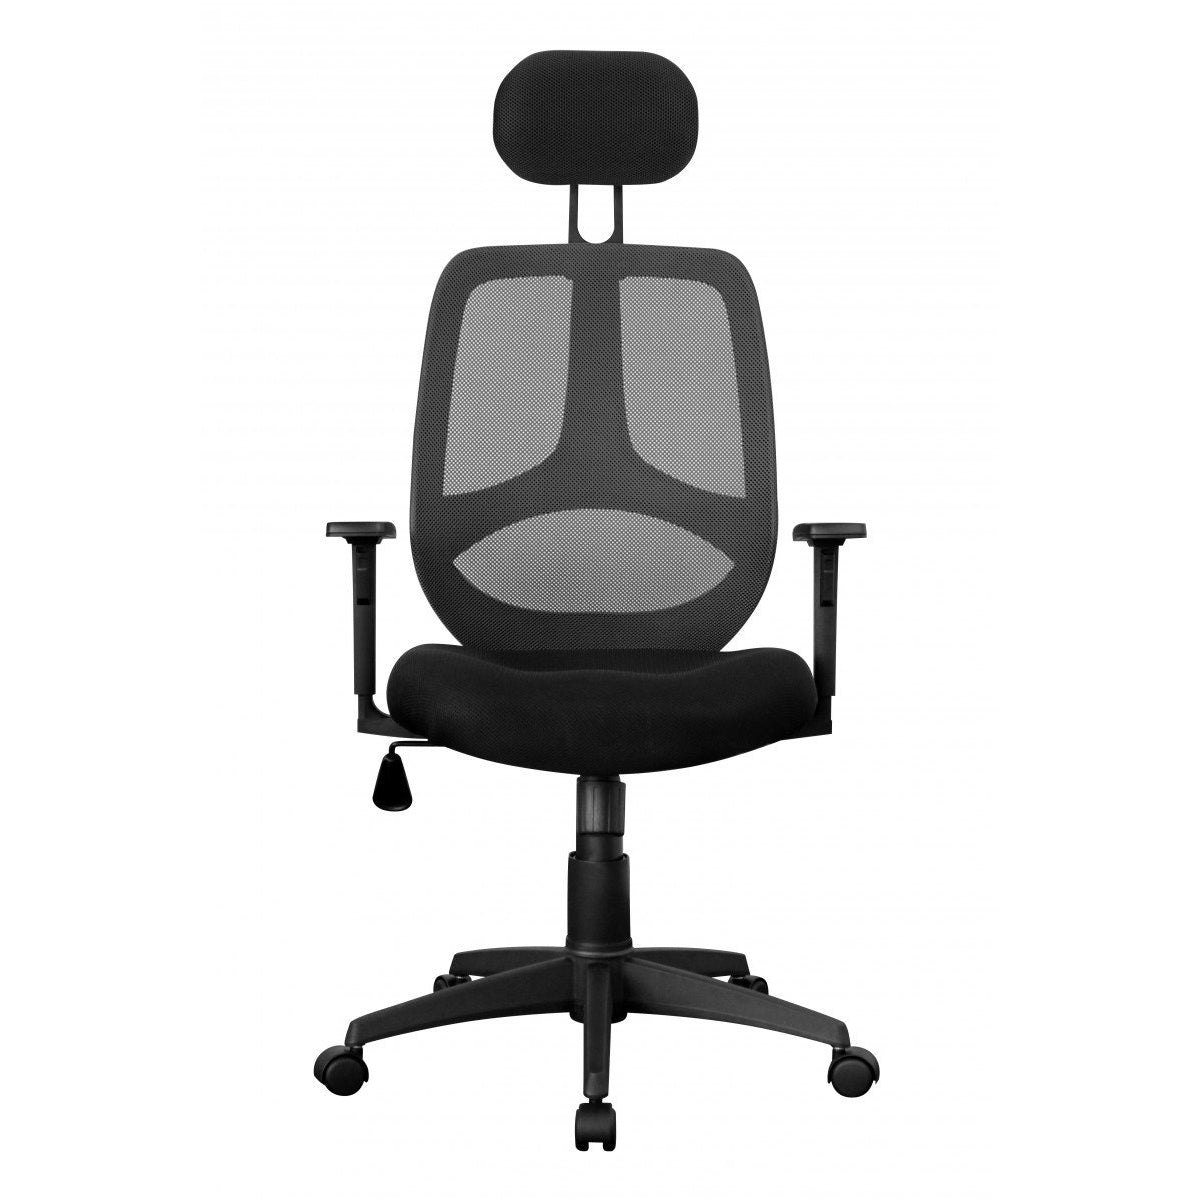 Nancy's Zion Office Chair - Swivel chair - Executive chair - Adjustable - Headrest - Ergonomic - Black